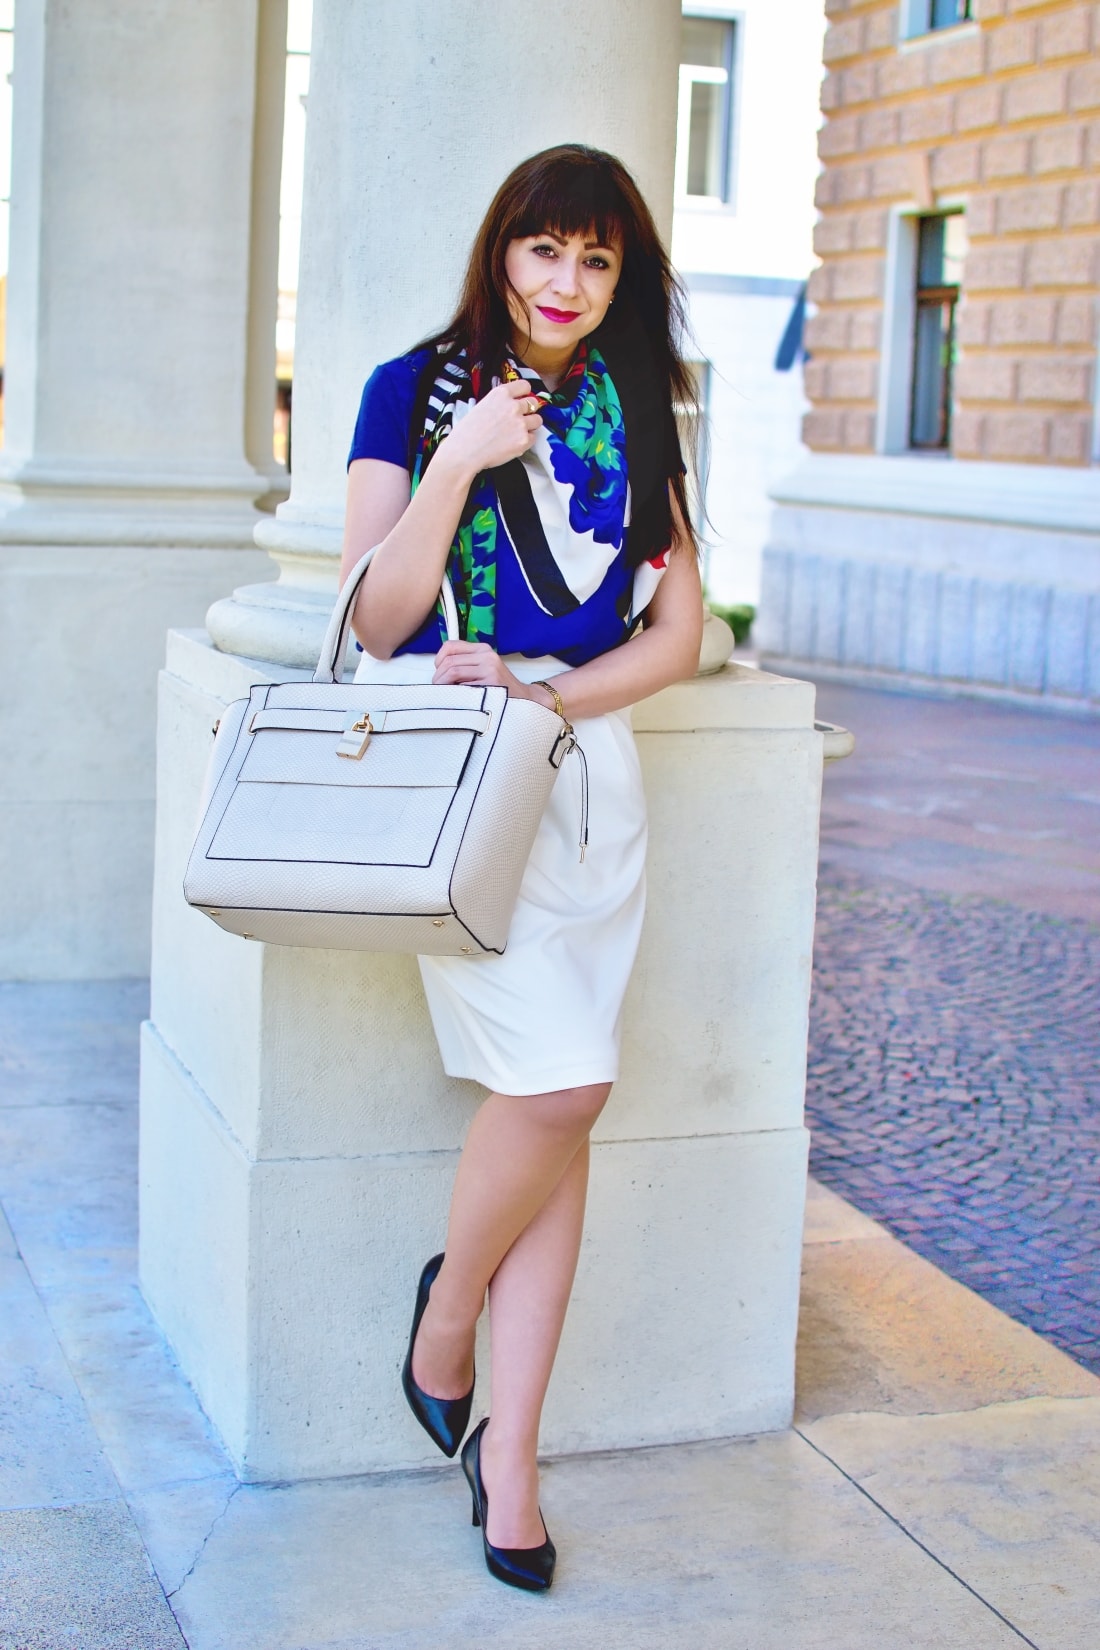 katharine-fashion-is-beautiful-blog-mix-kvetov-a-satka-5-blogger